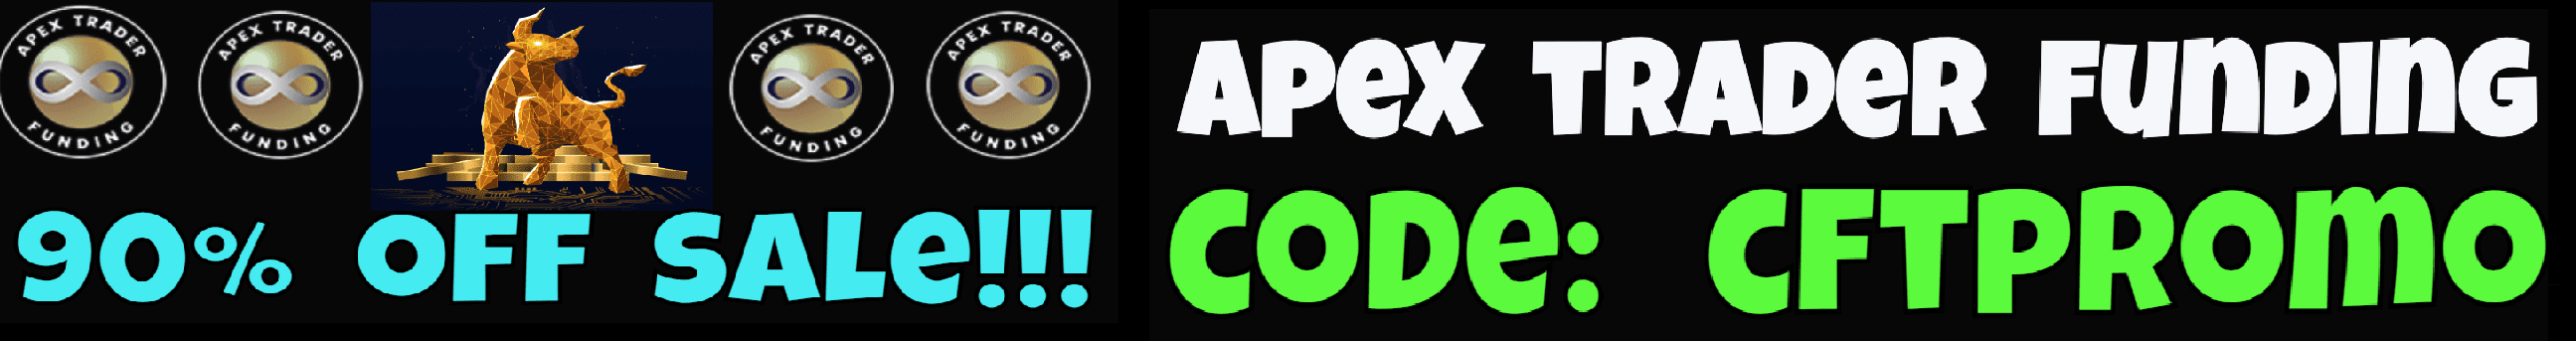 apex trader funding sale discount promo